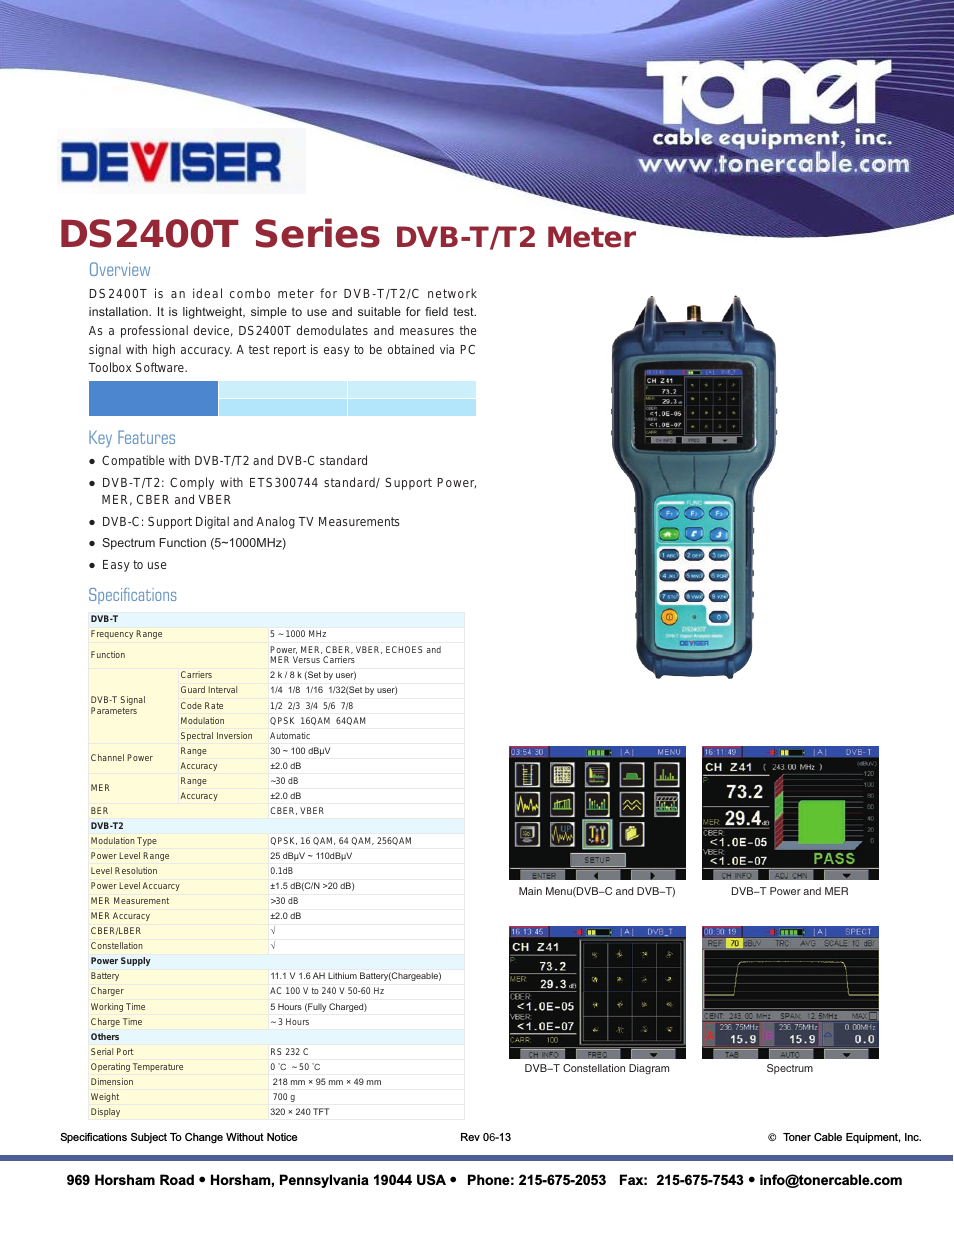 DS2400T Series DVB-T-T Meter